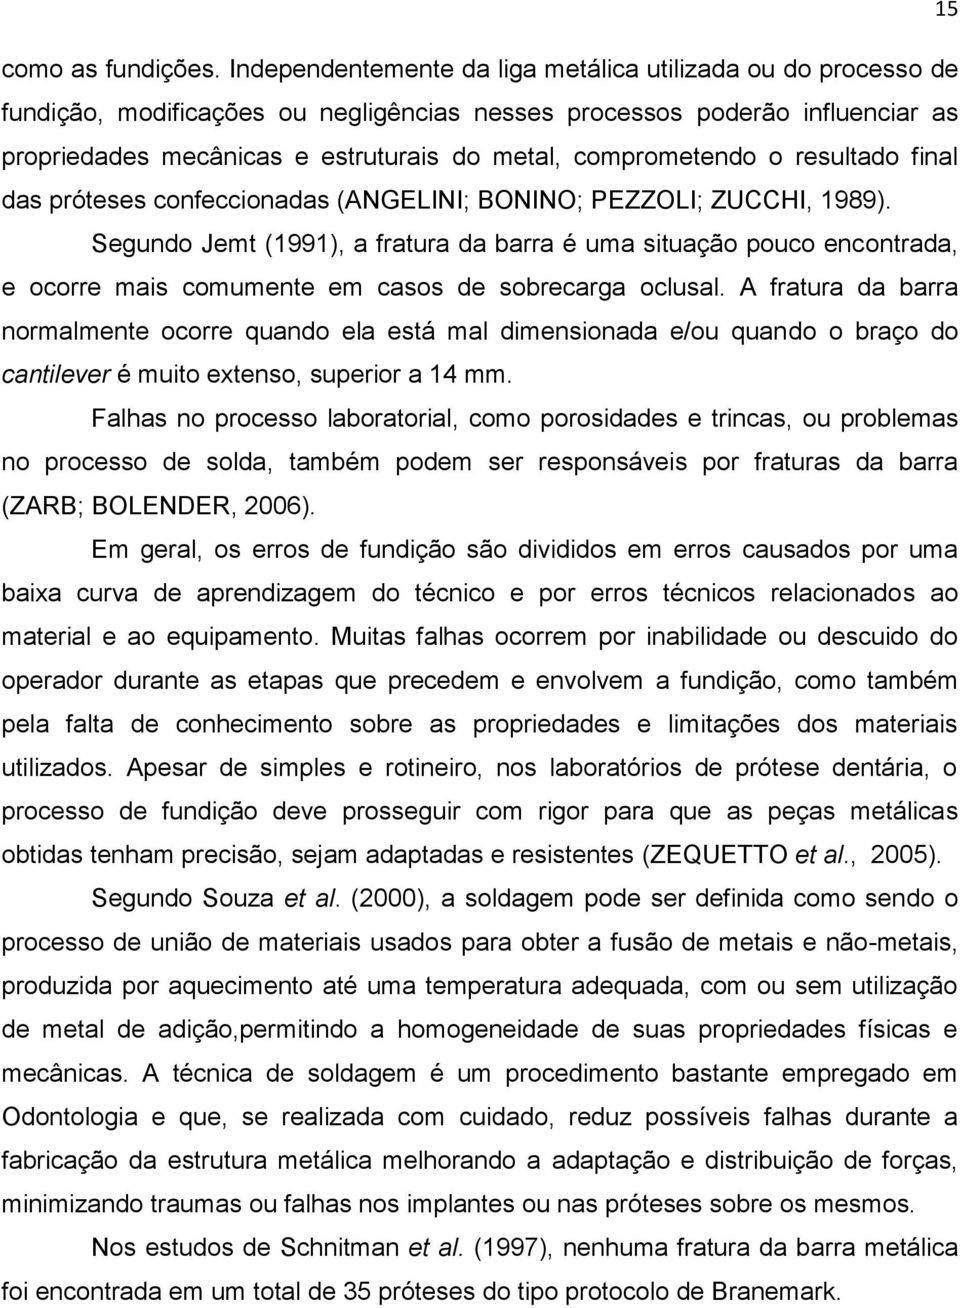 comprometendo o resultado final das próteses confeccionadas (ANGELINI; BONINO; PEZZOLI; ZUCCHI, 1989).